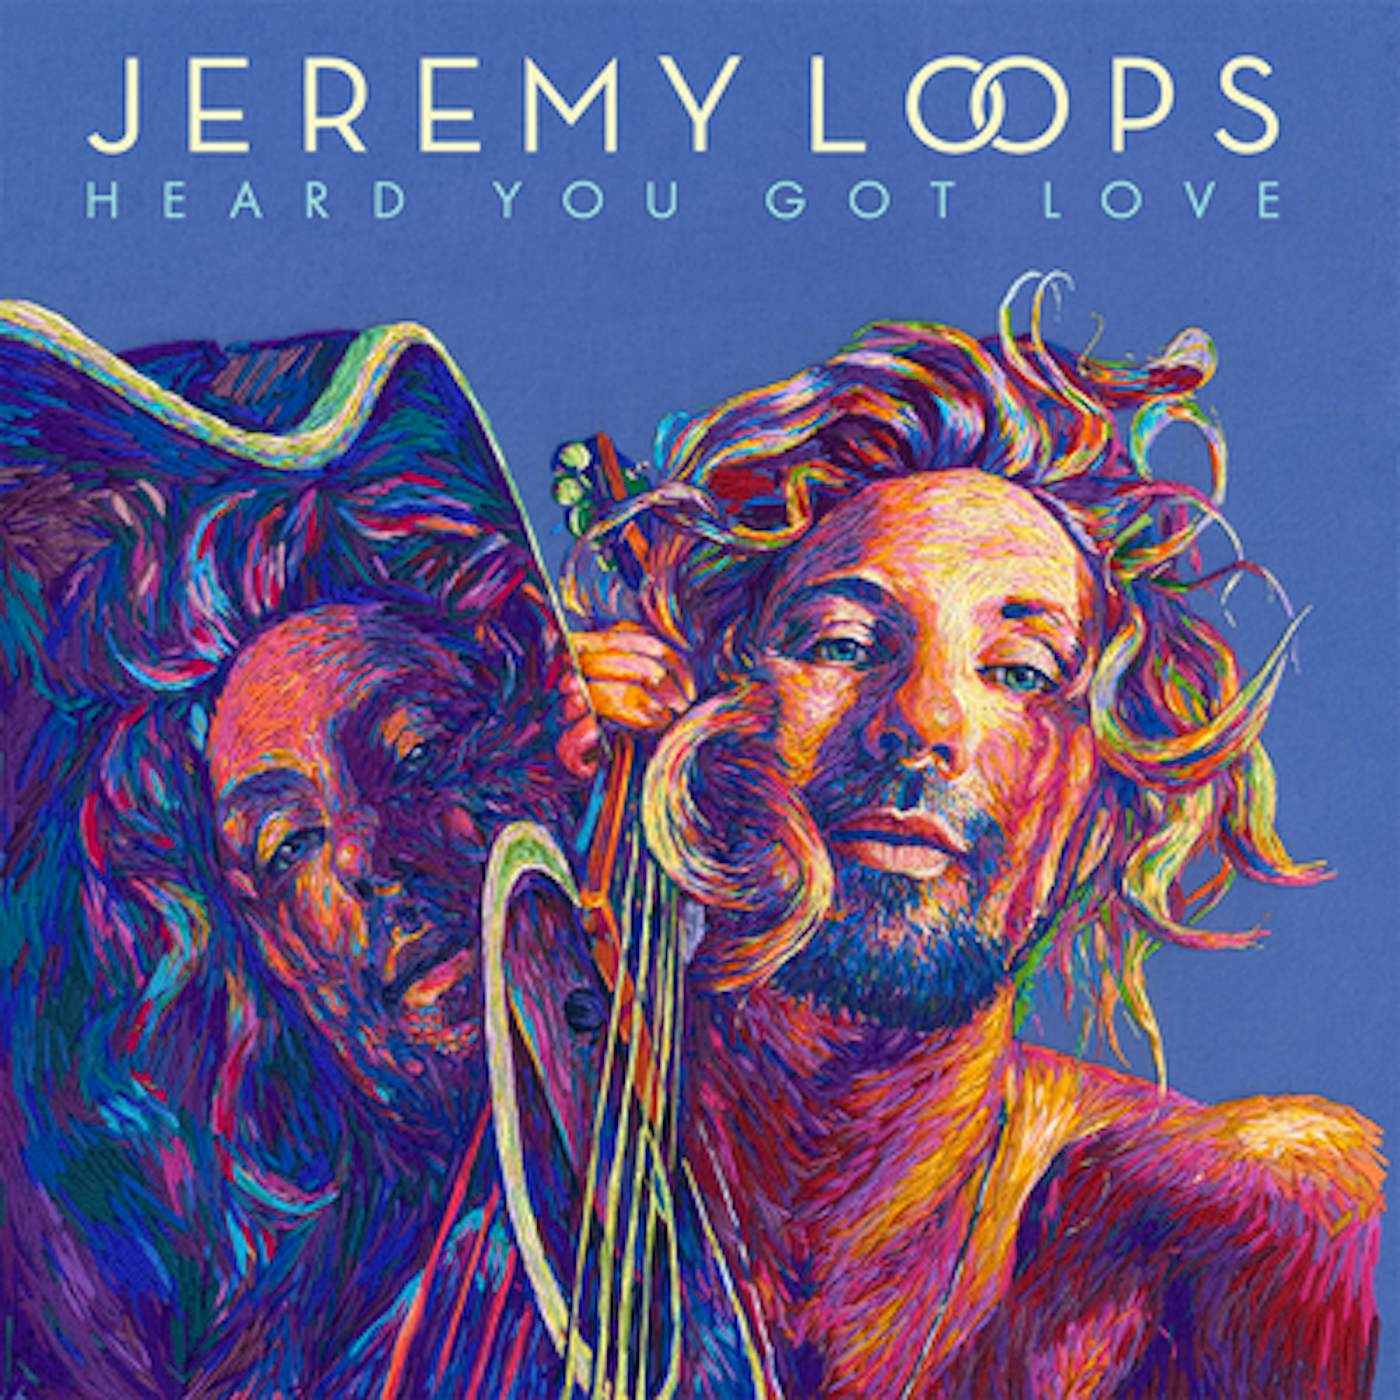 Jeremy Loops Heard You Got Love Vinyl Record